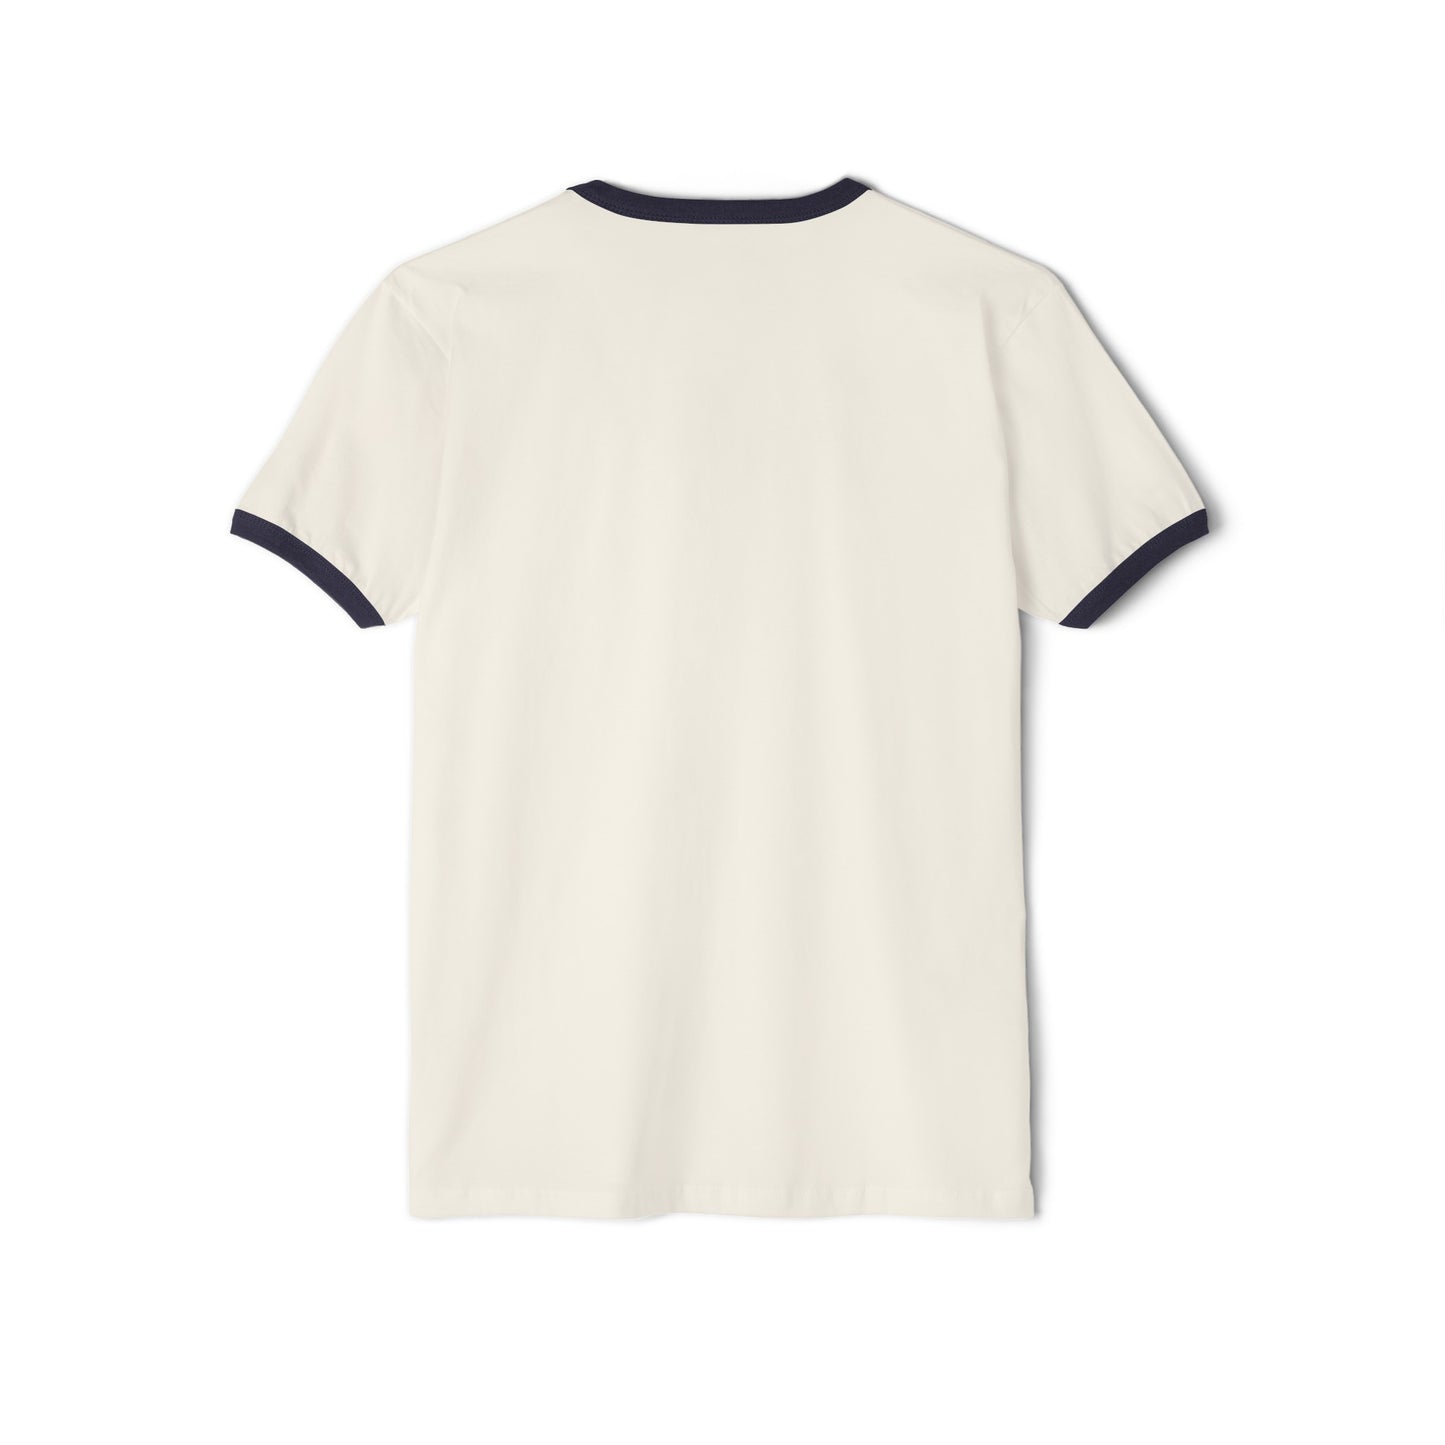 Draw and Guffaw Unisex Cotton Ringer T-Shirt